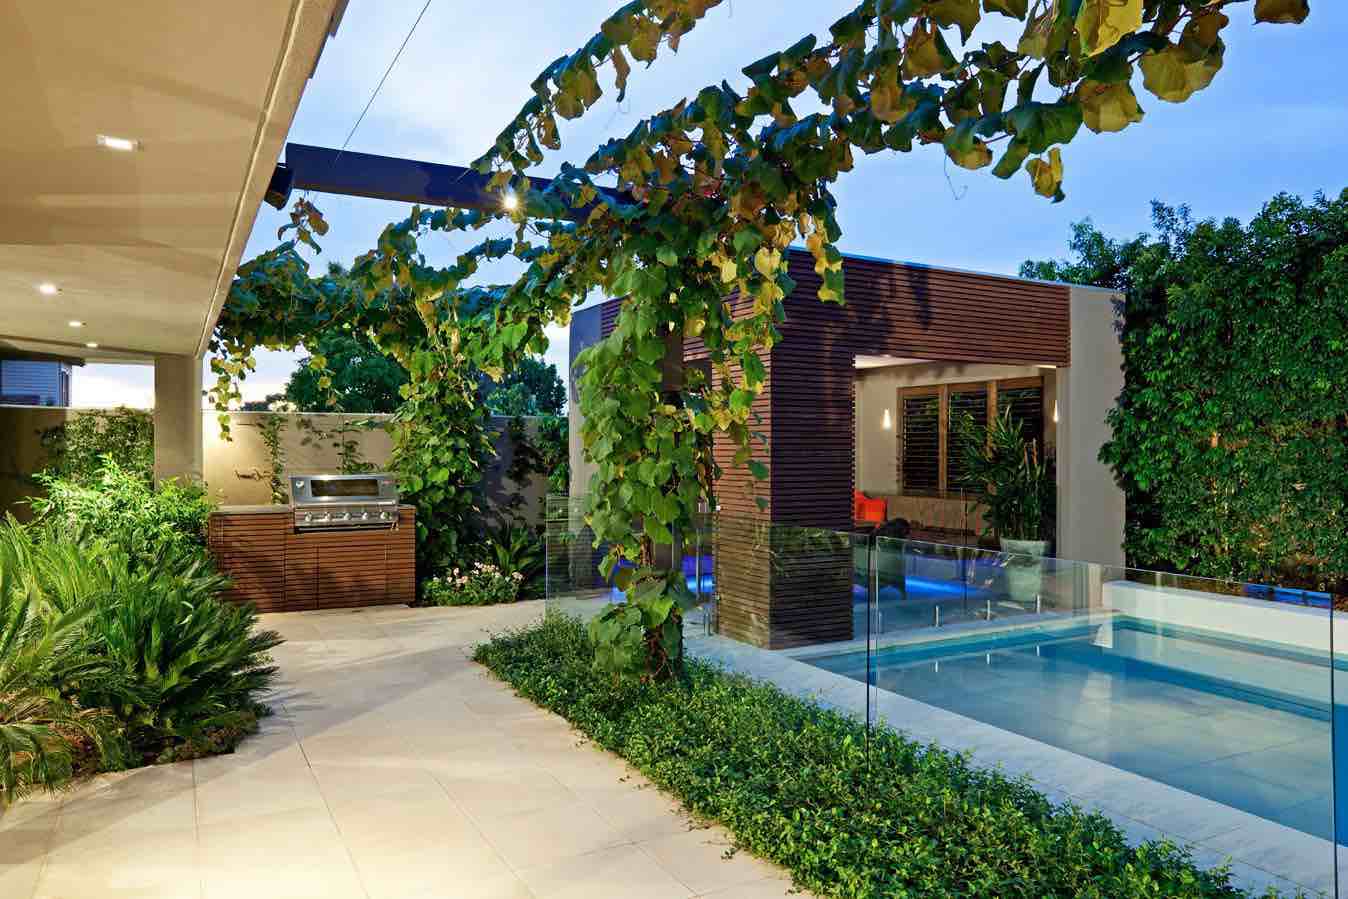 41 Backyard Design Ideas For Small Yards Worthminer